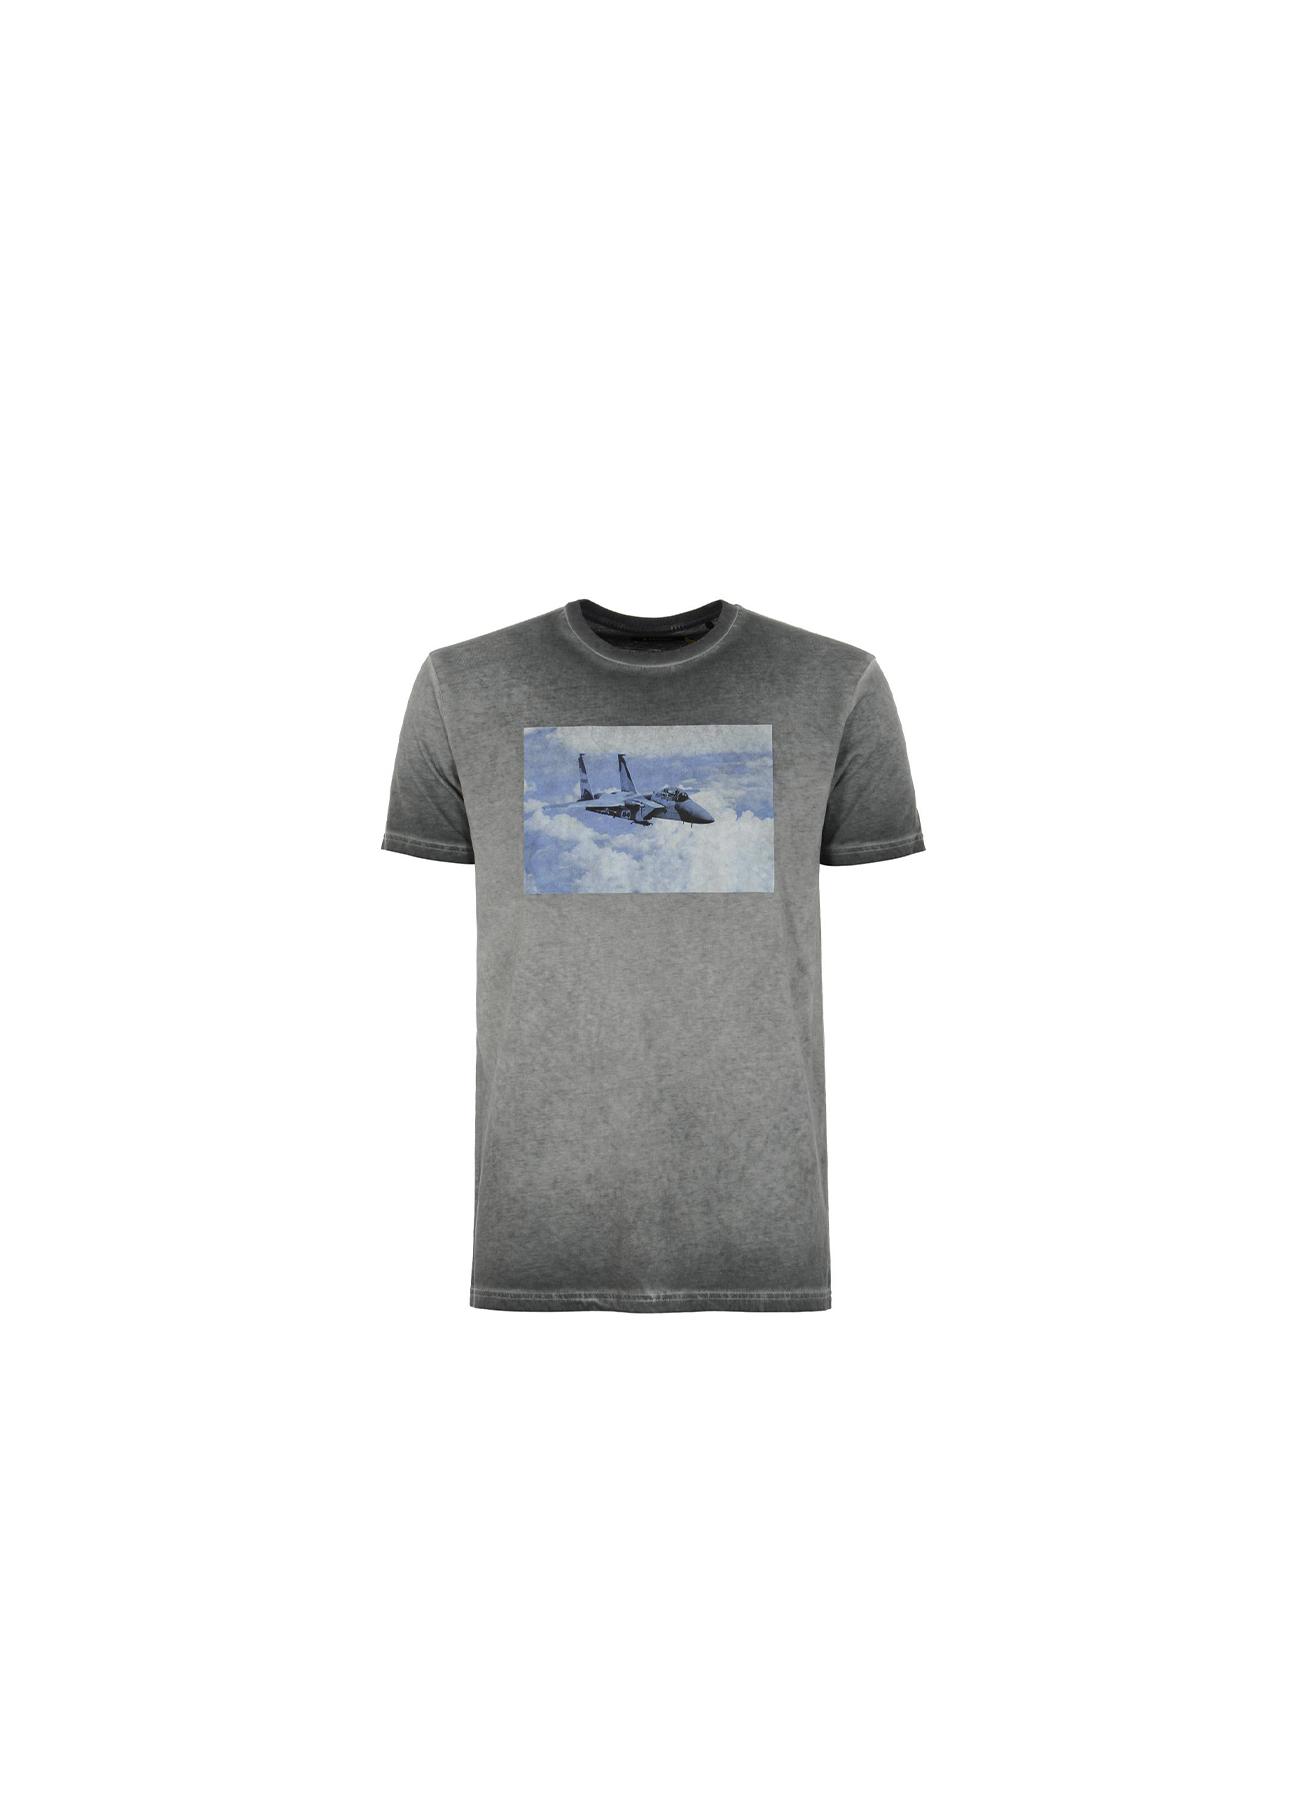 T-shirt męski TSHMT-0054-51(Z21)